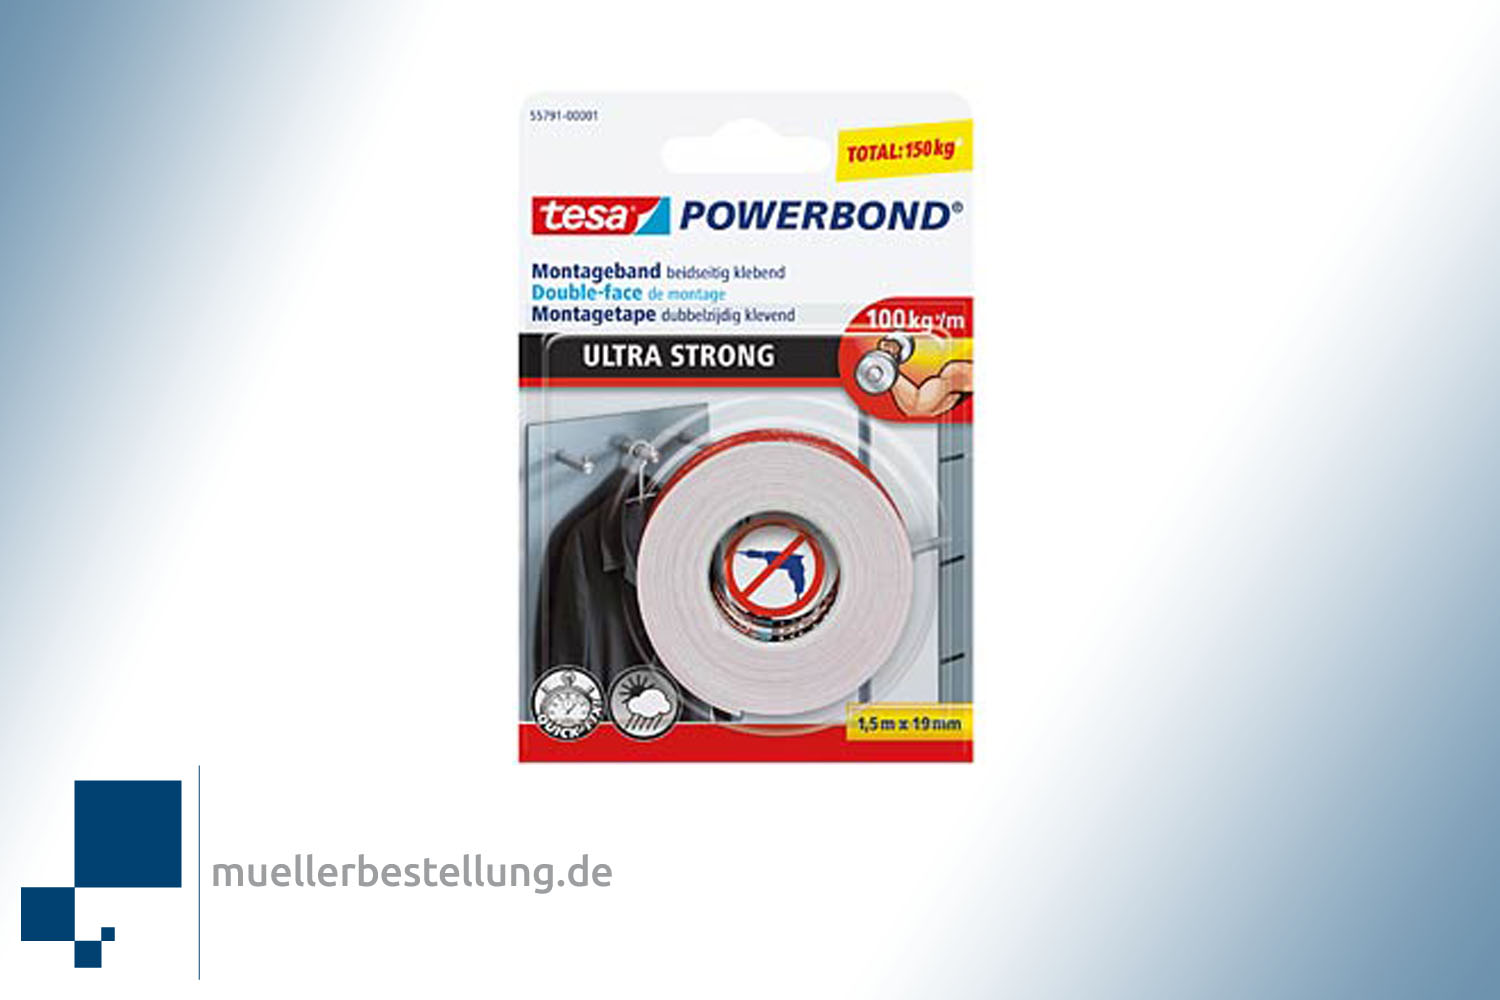 TESA 55791 ruban de montage tesa Powerbond® Ultra Strong, 1,5 mx 19 mm